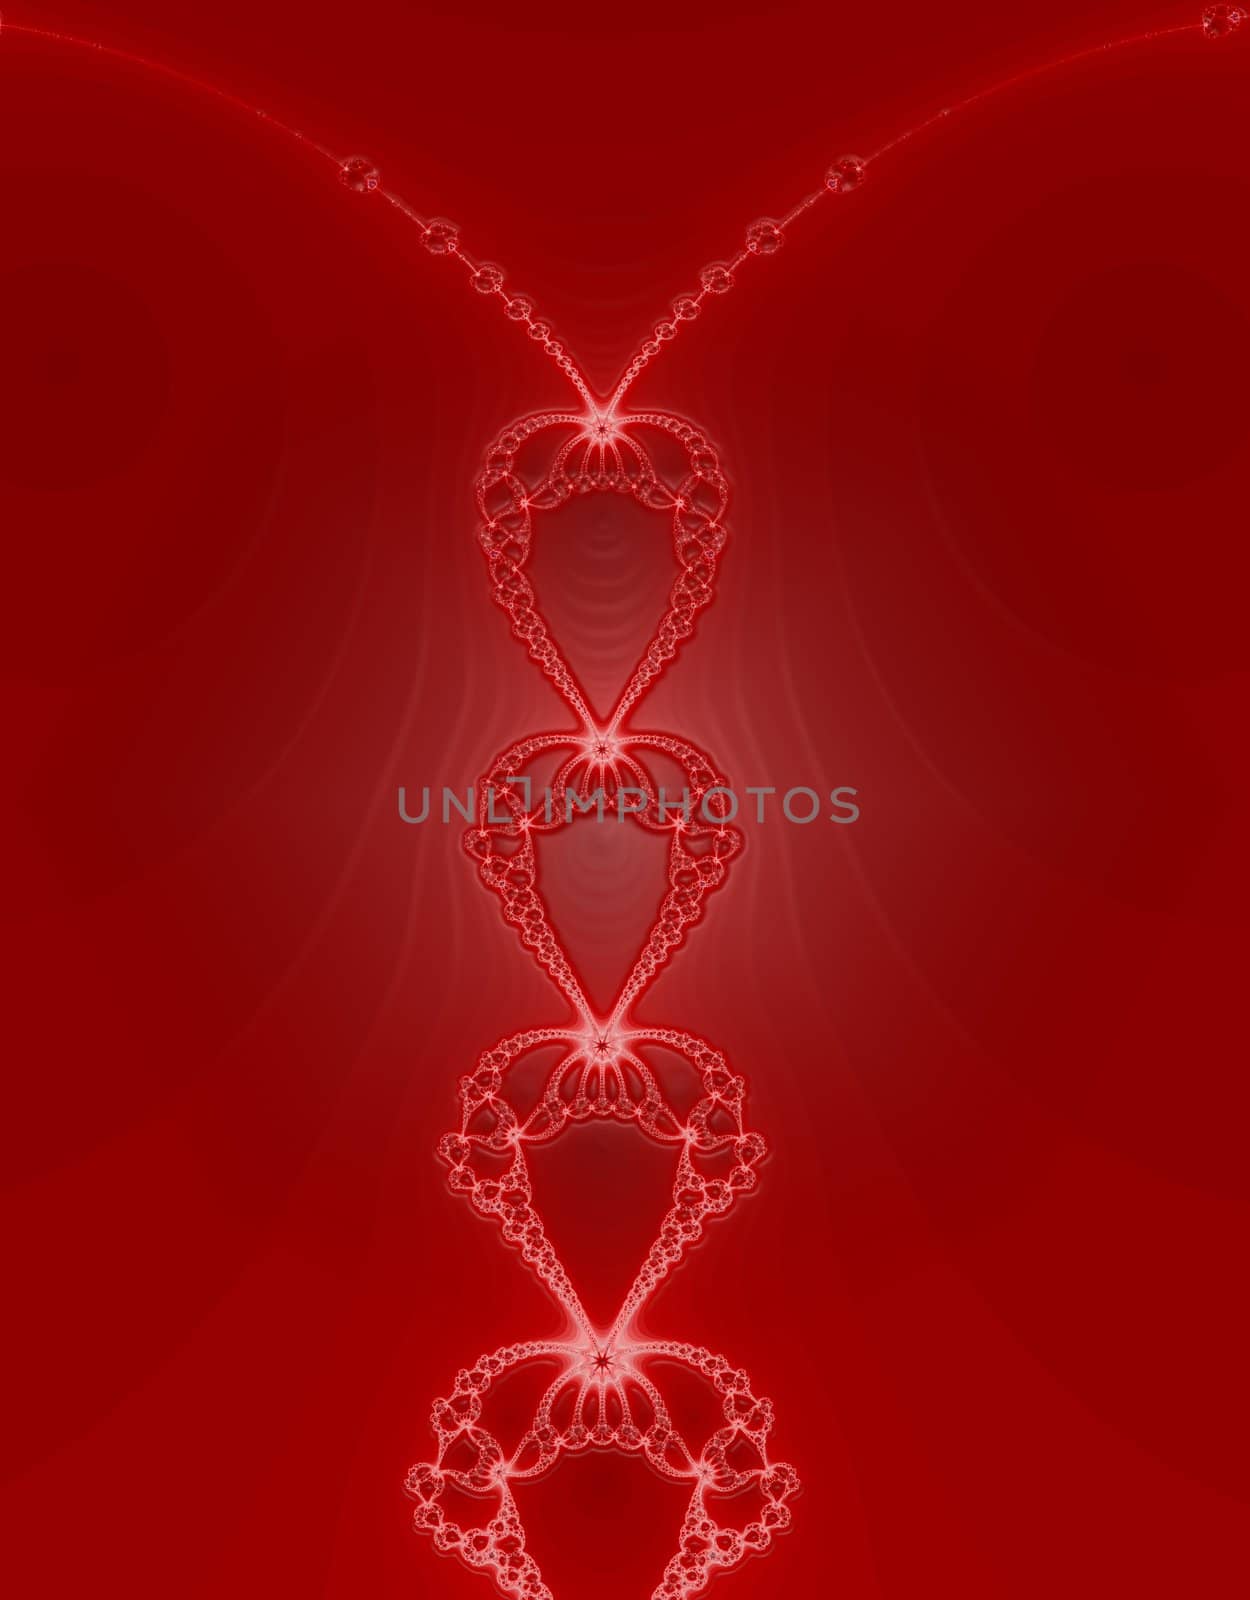 Fractal image resembling hearts.